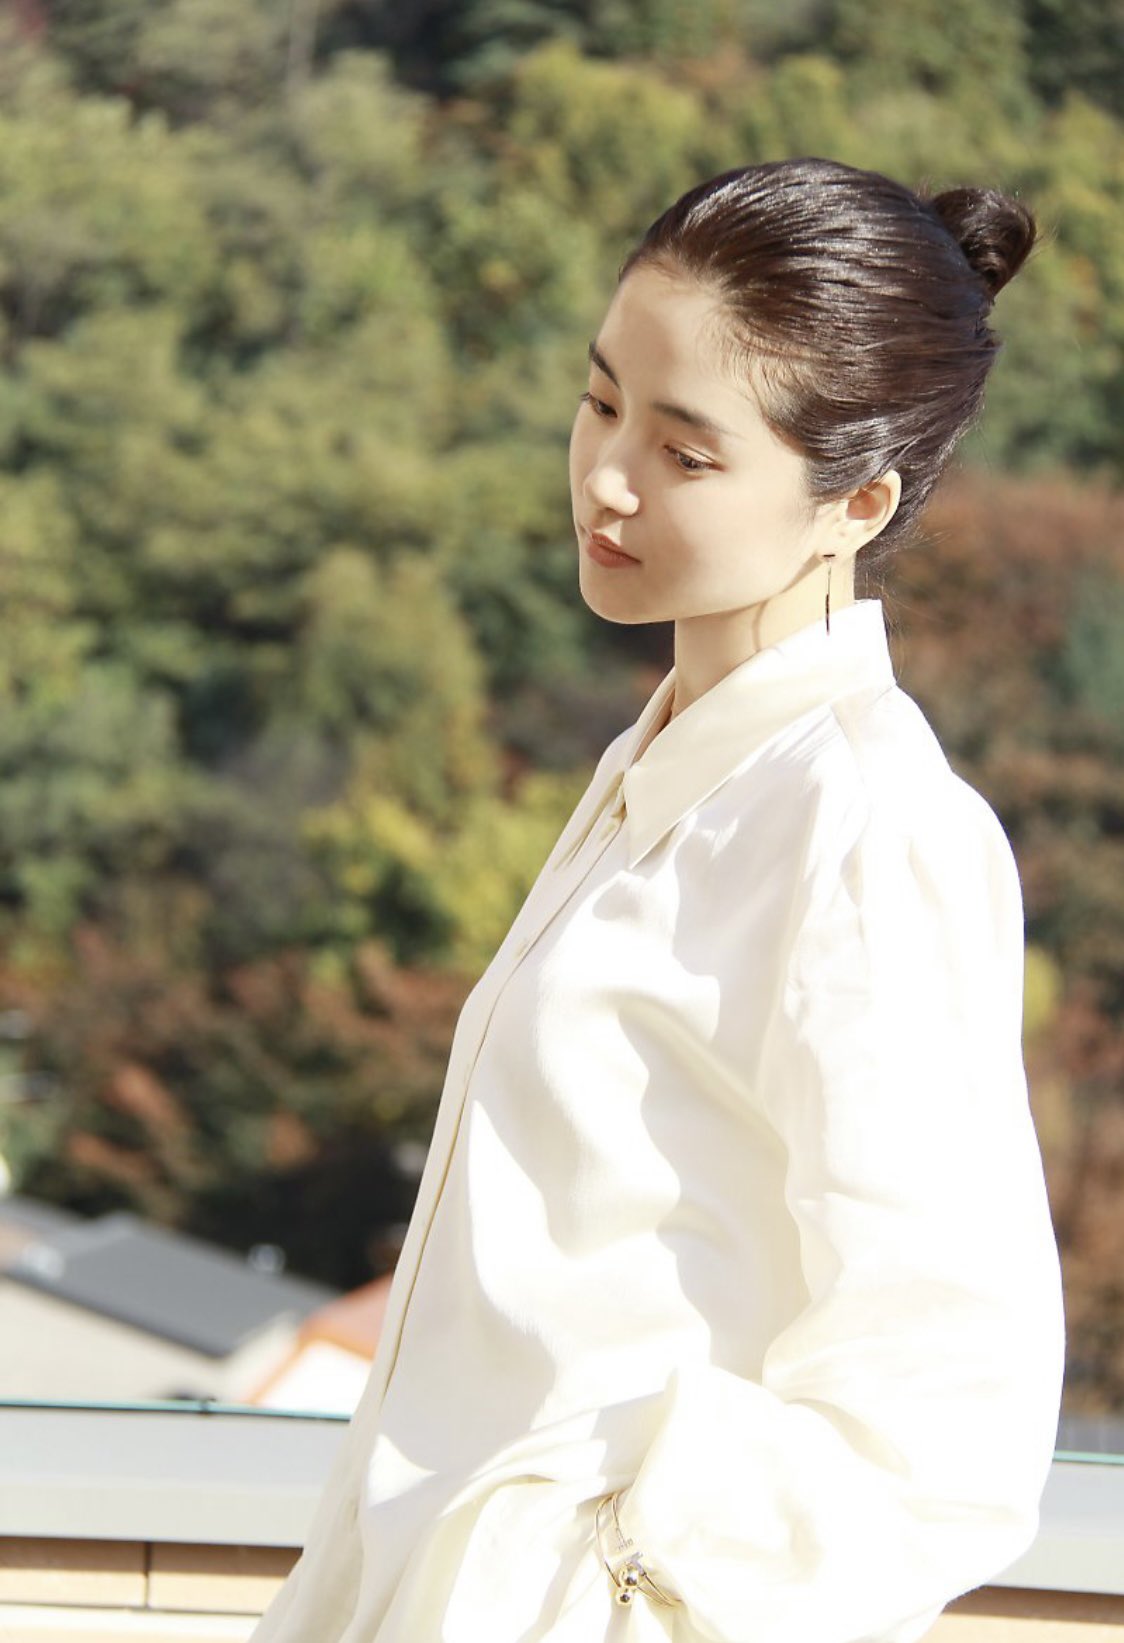 kim tae ri mặc áo trắng búi tóc